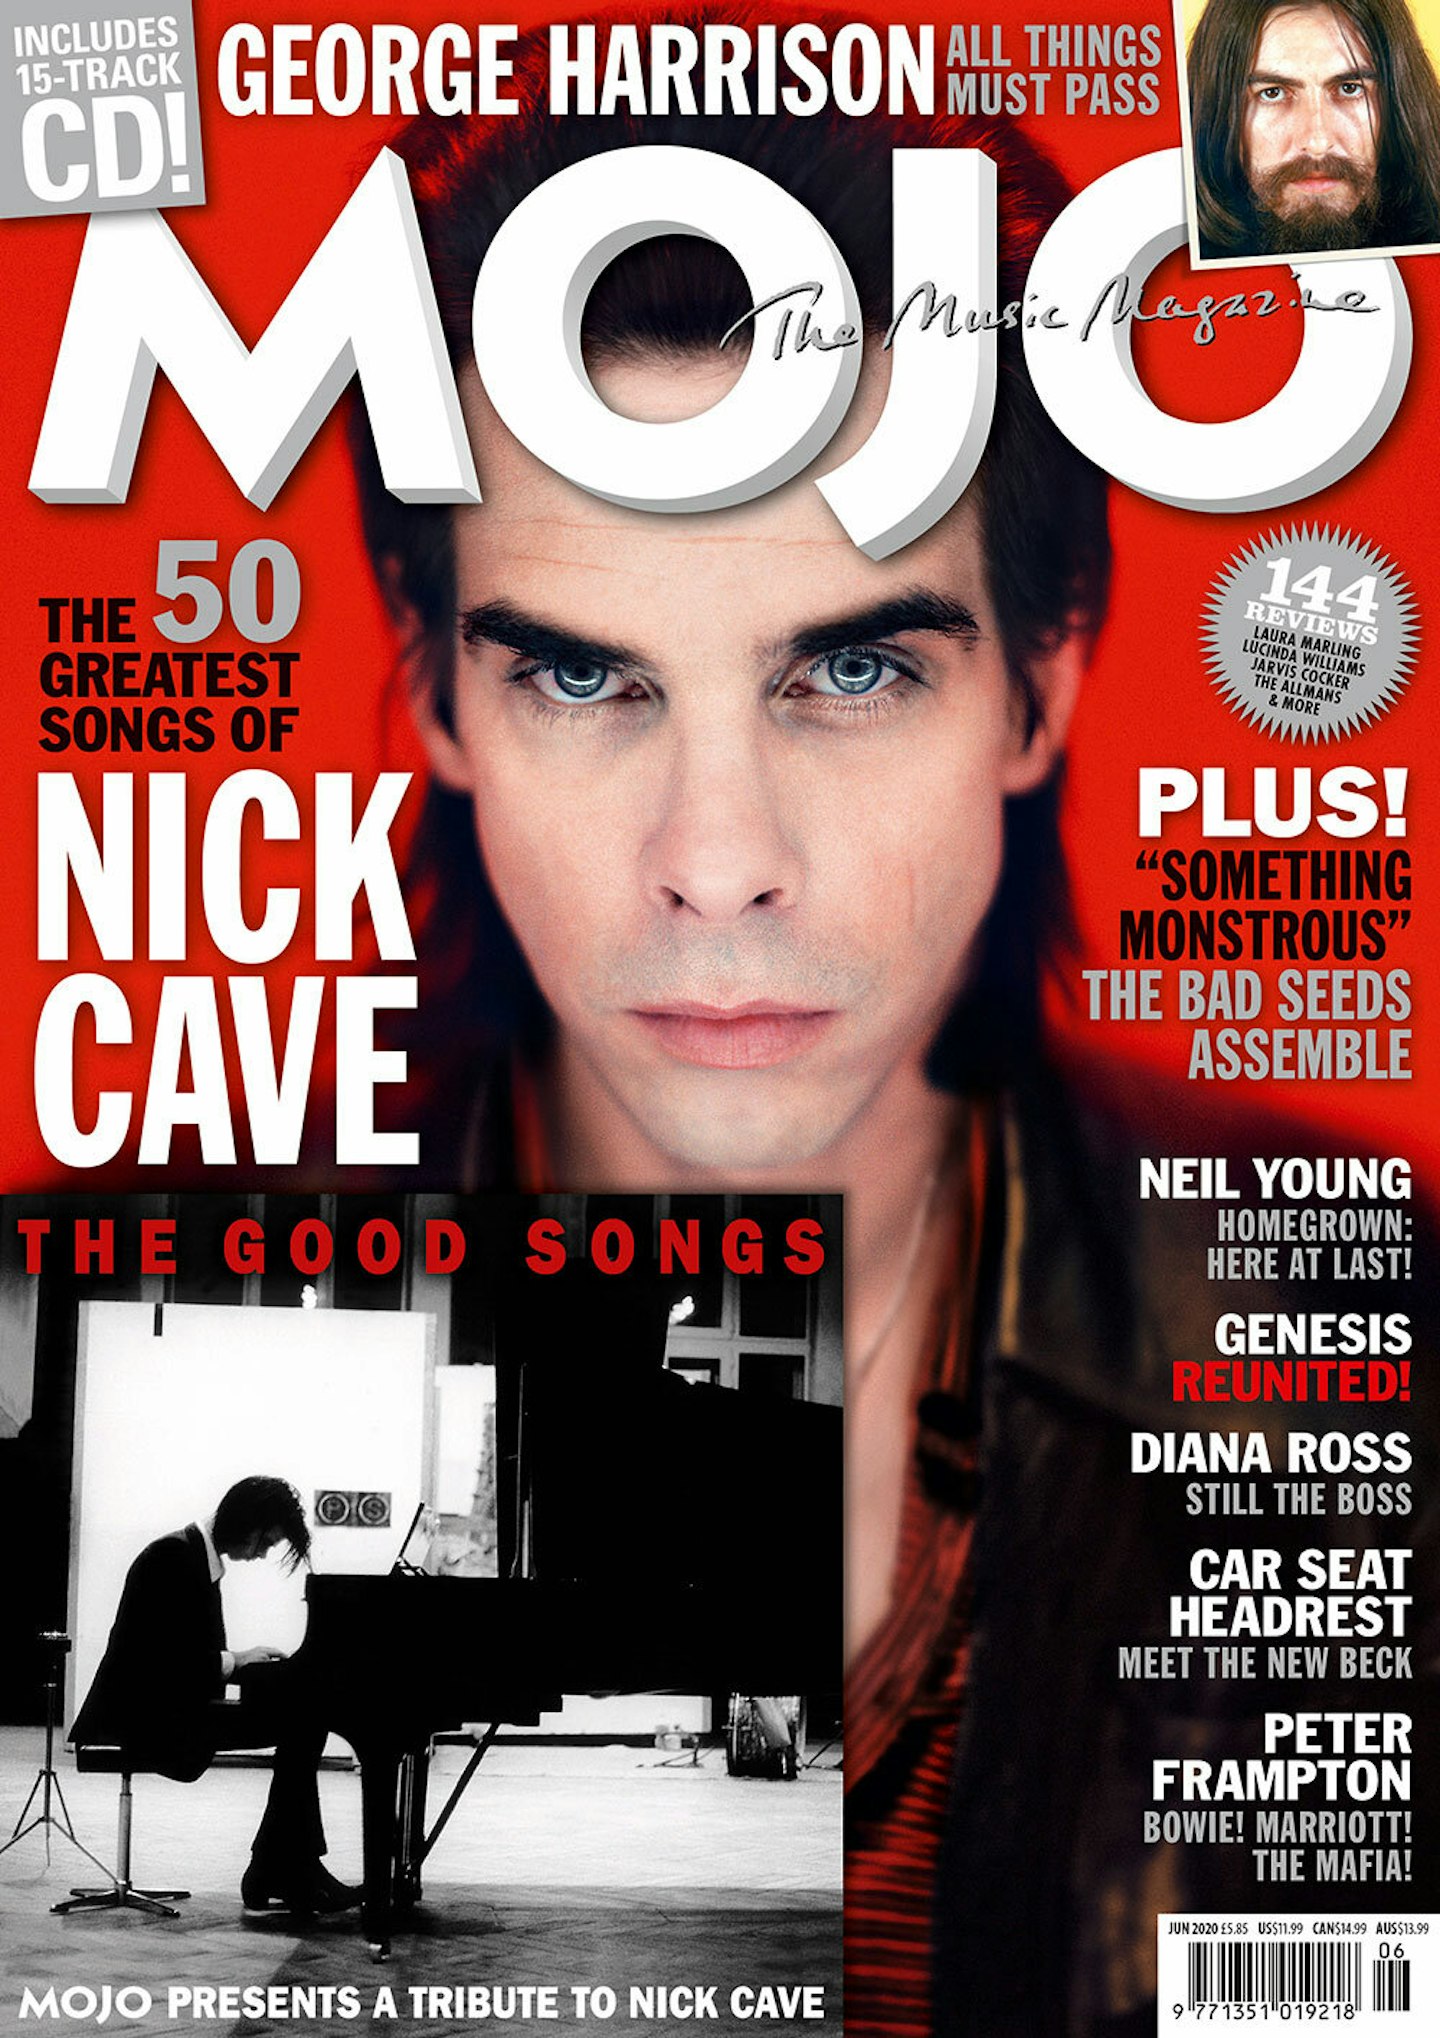 MOJO 319 – June 2020: Nick Cave